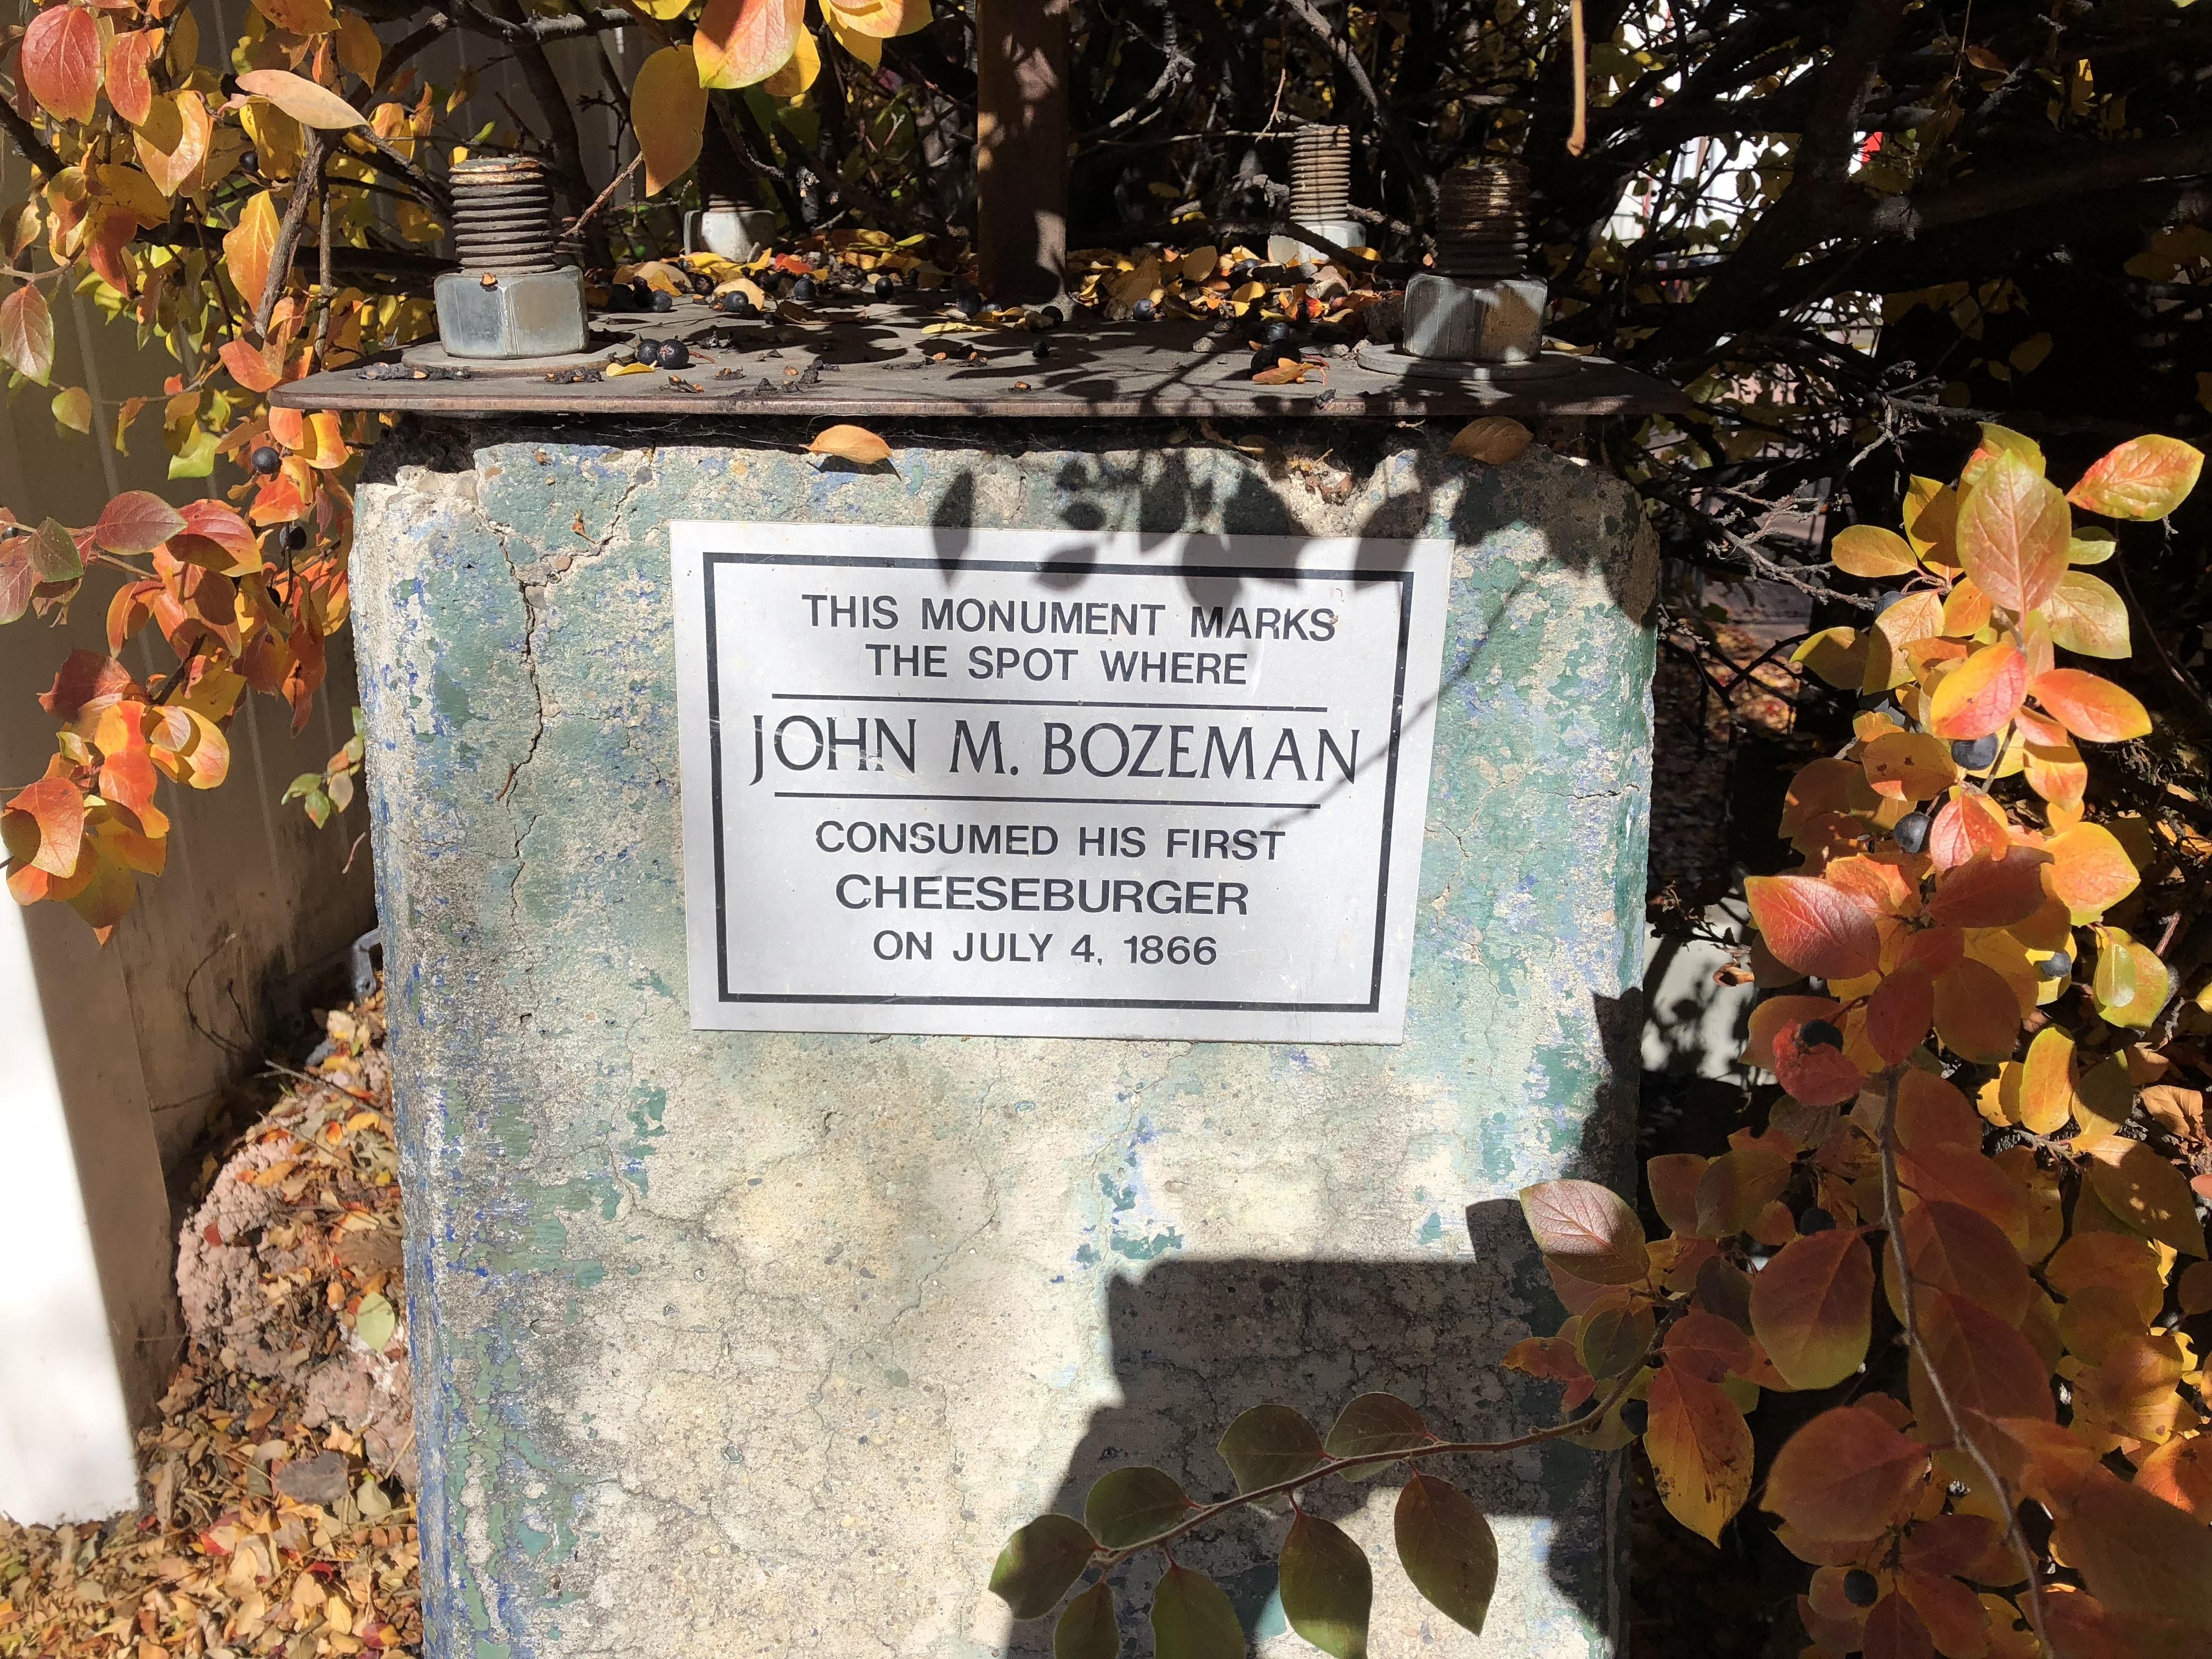 Found this in Bozeman, MT